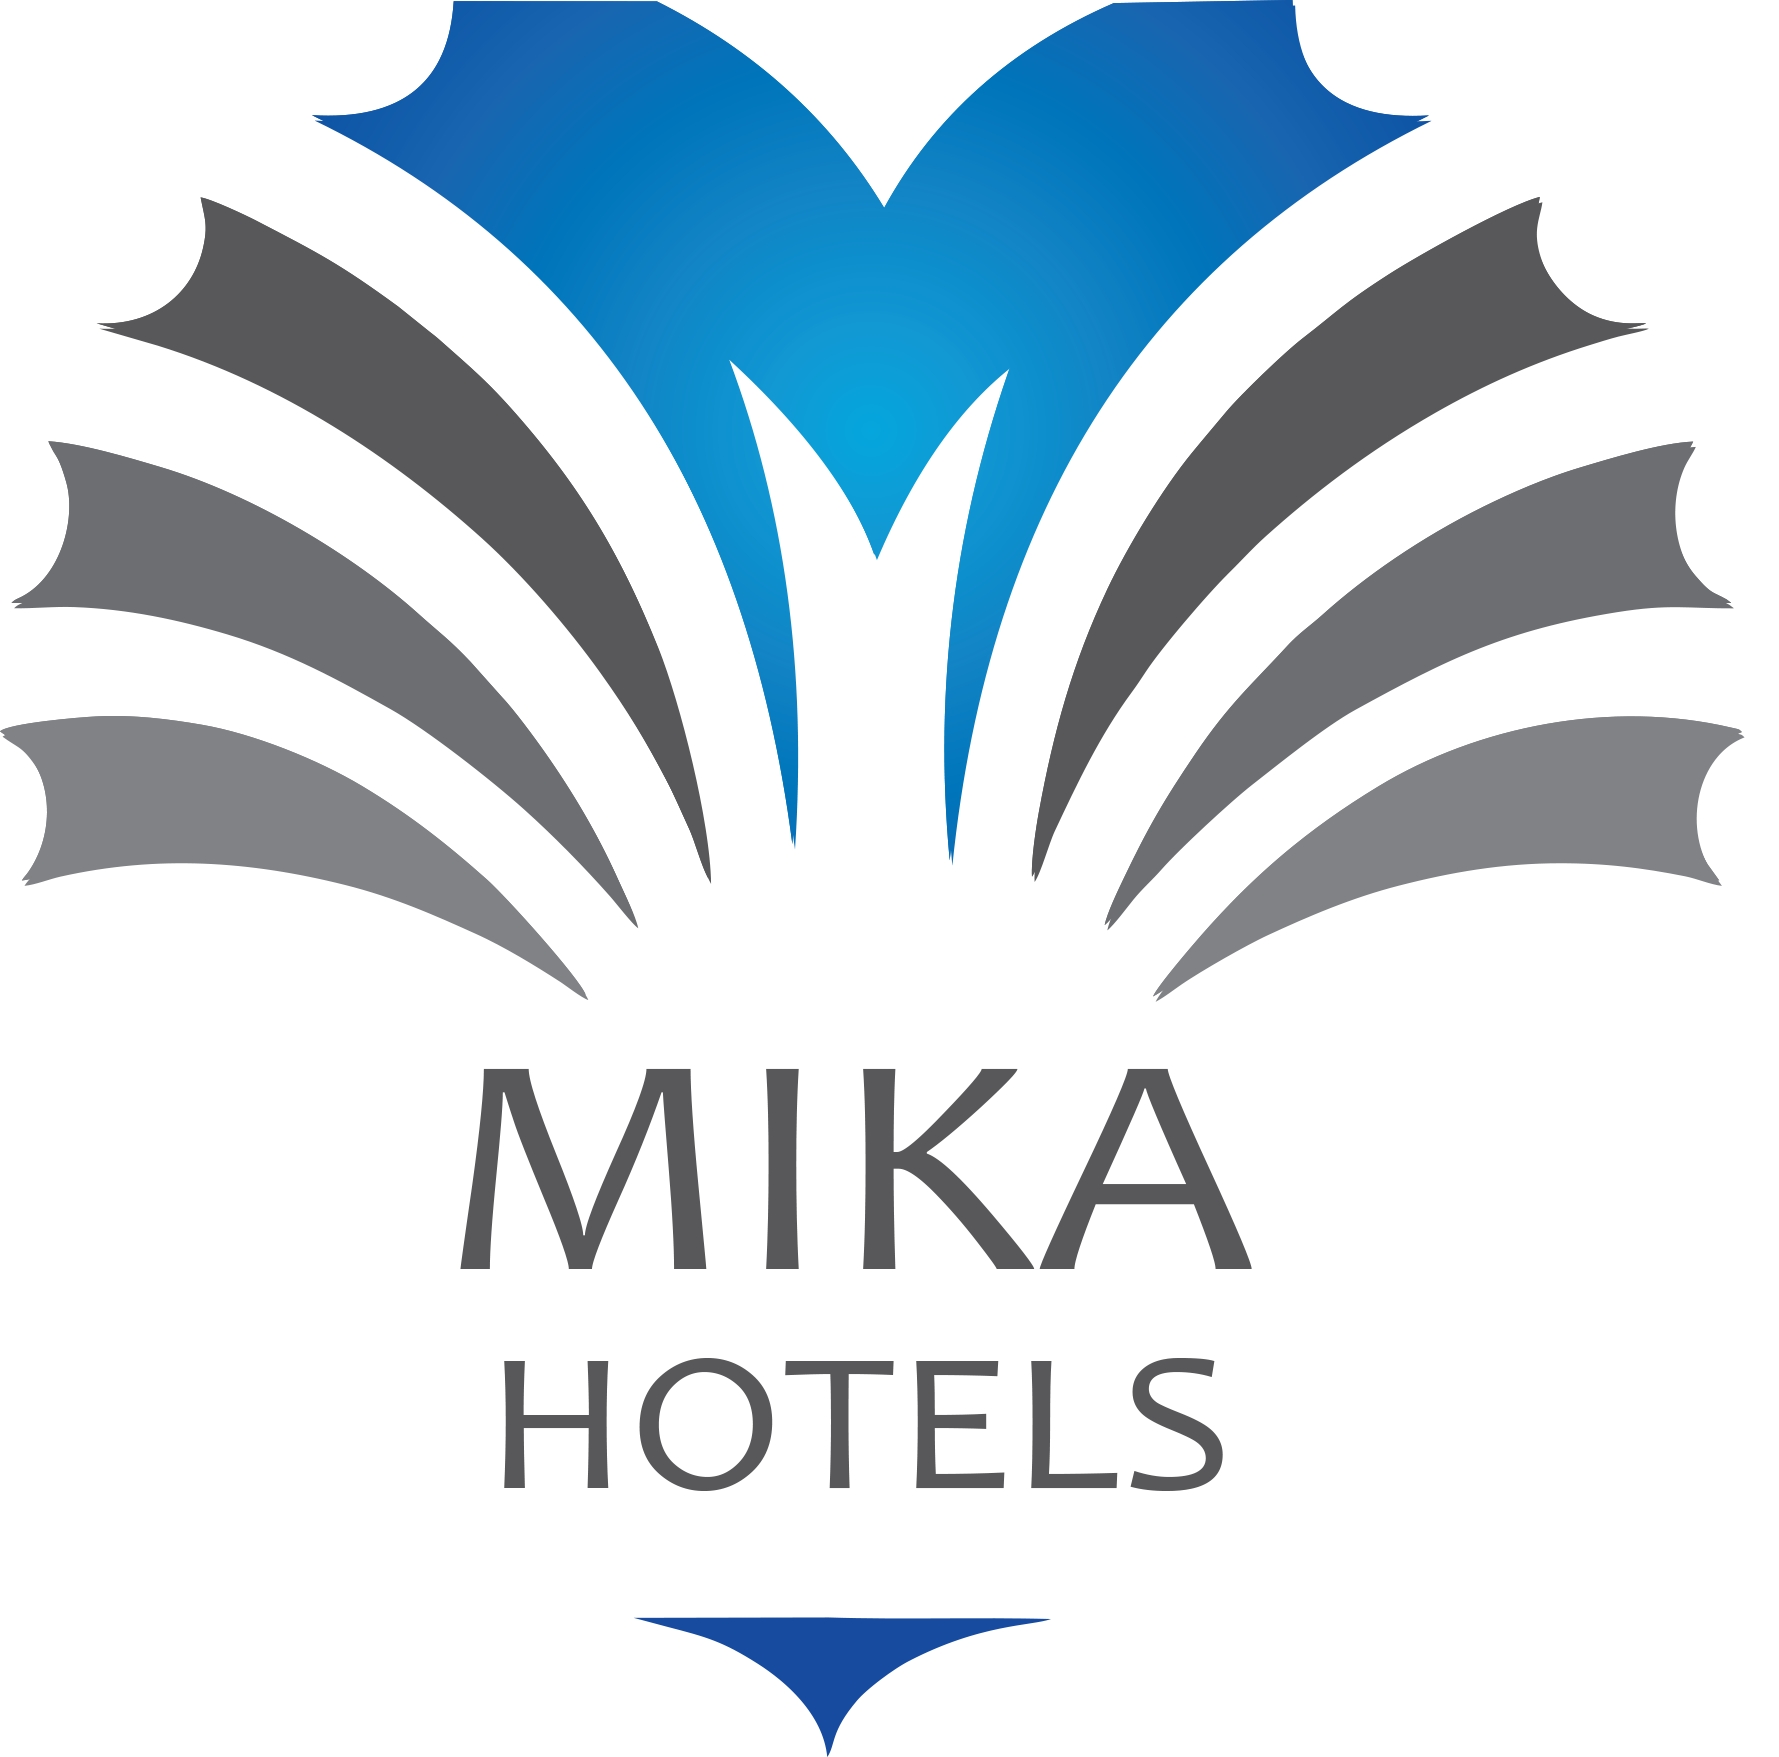  Hotel  logo  new Mika Hotels 